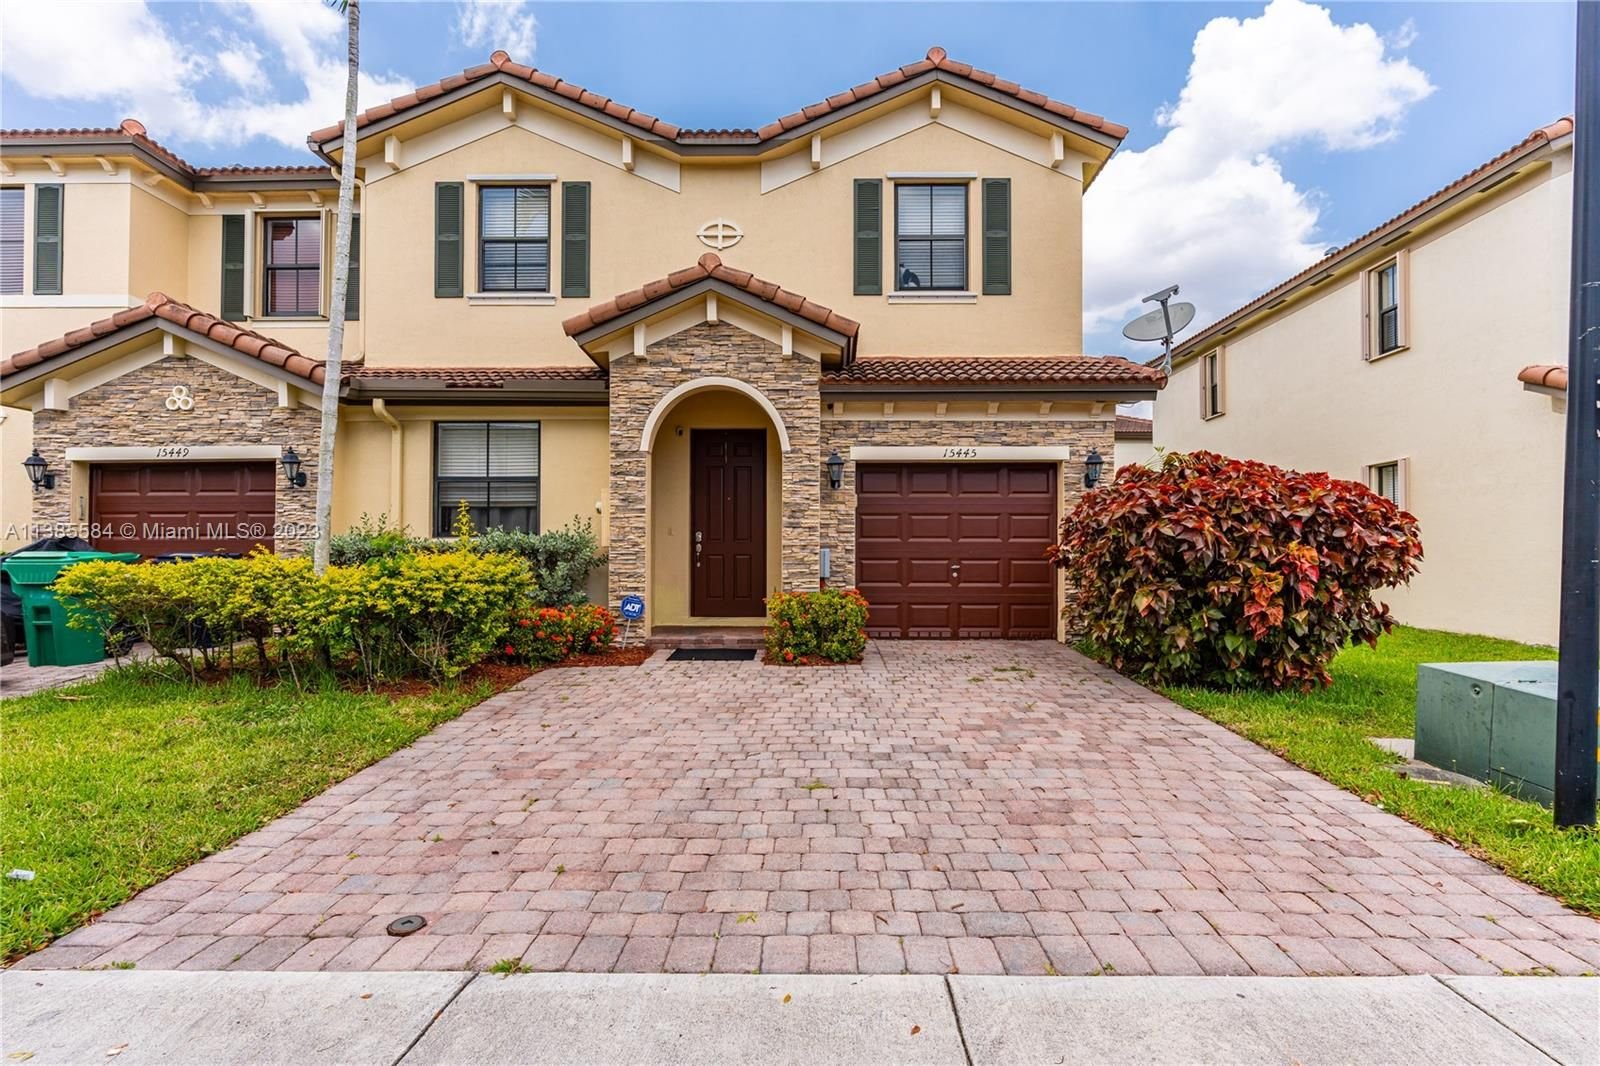 Real estate property located at 15445 119th St, Miami-Dade County, Miami, FL